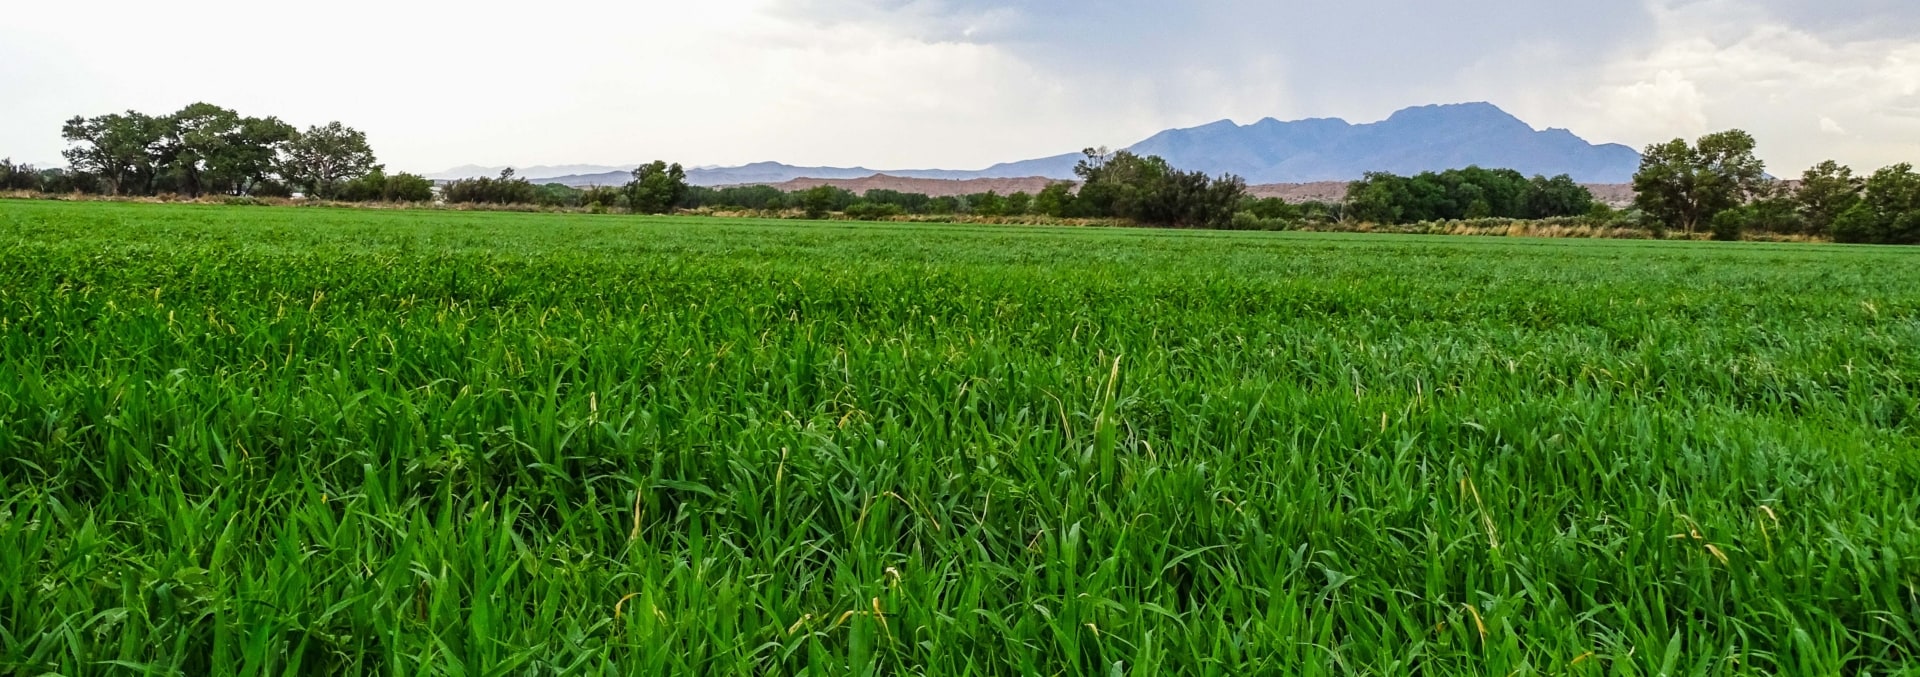 new mexico farms for sale las nutrias farm